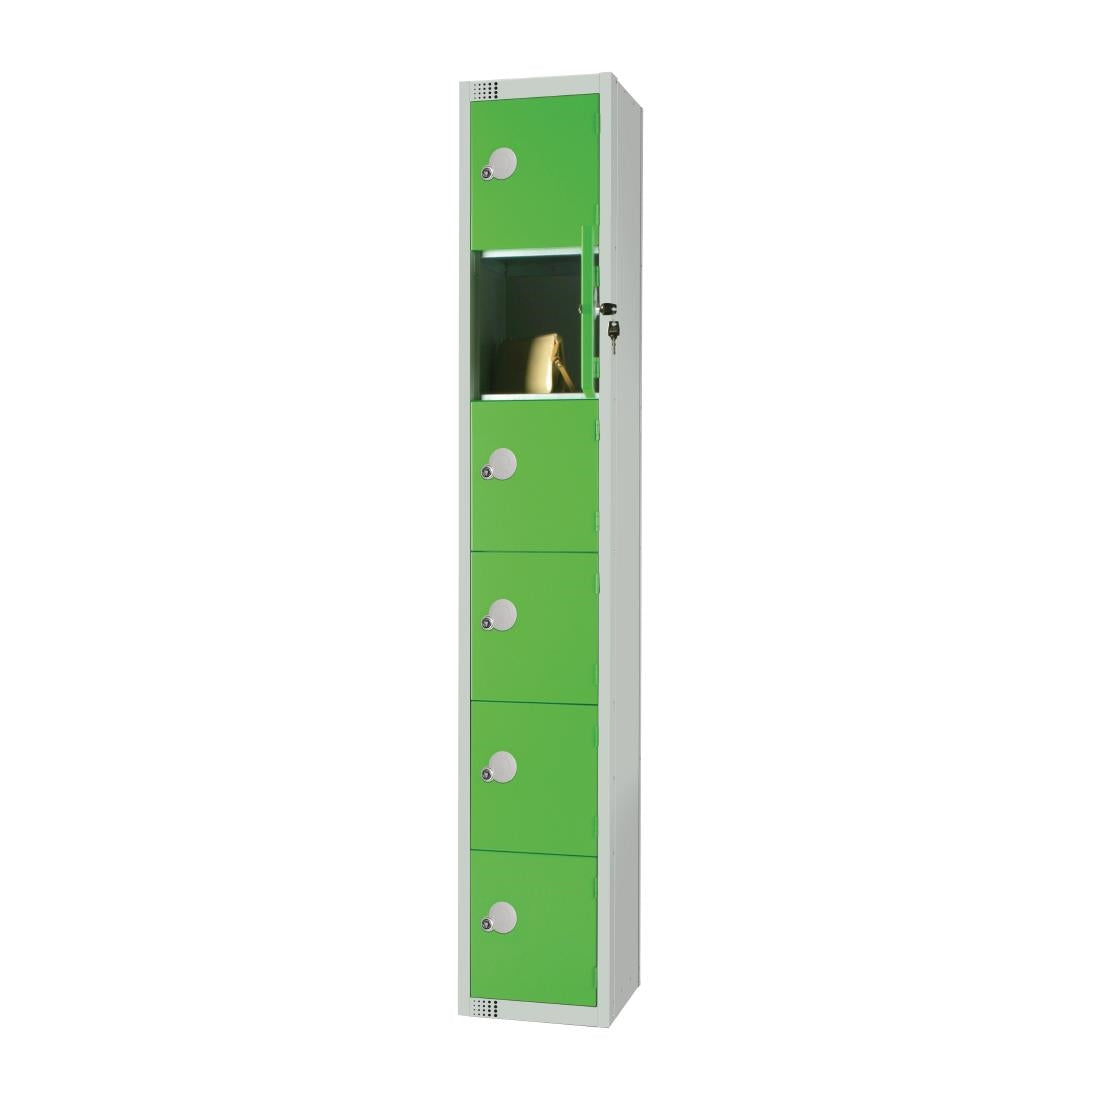 W988-CL Elite Six Door Manual Combination Locker Locker Green